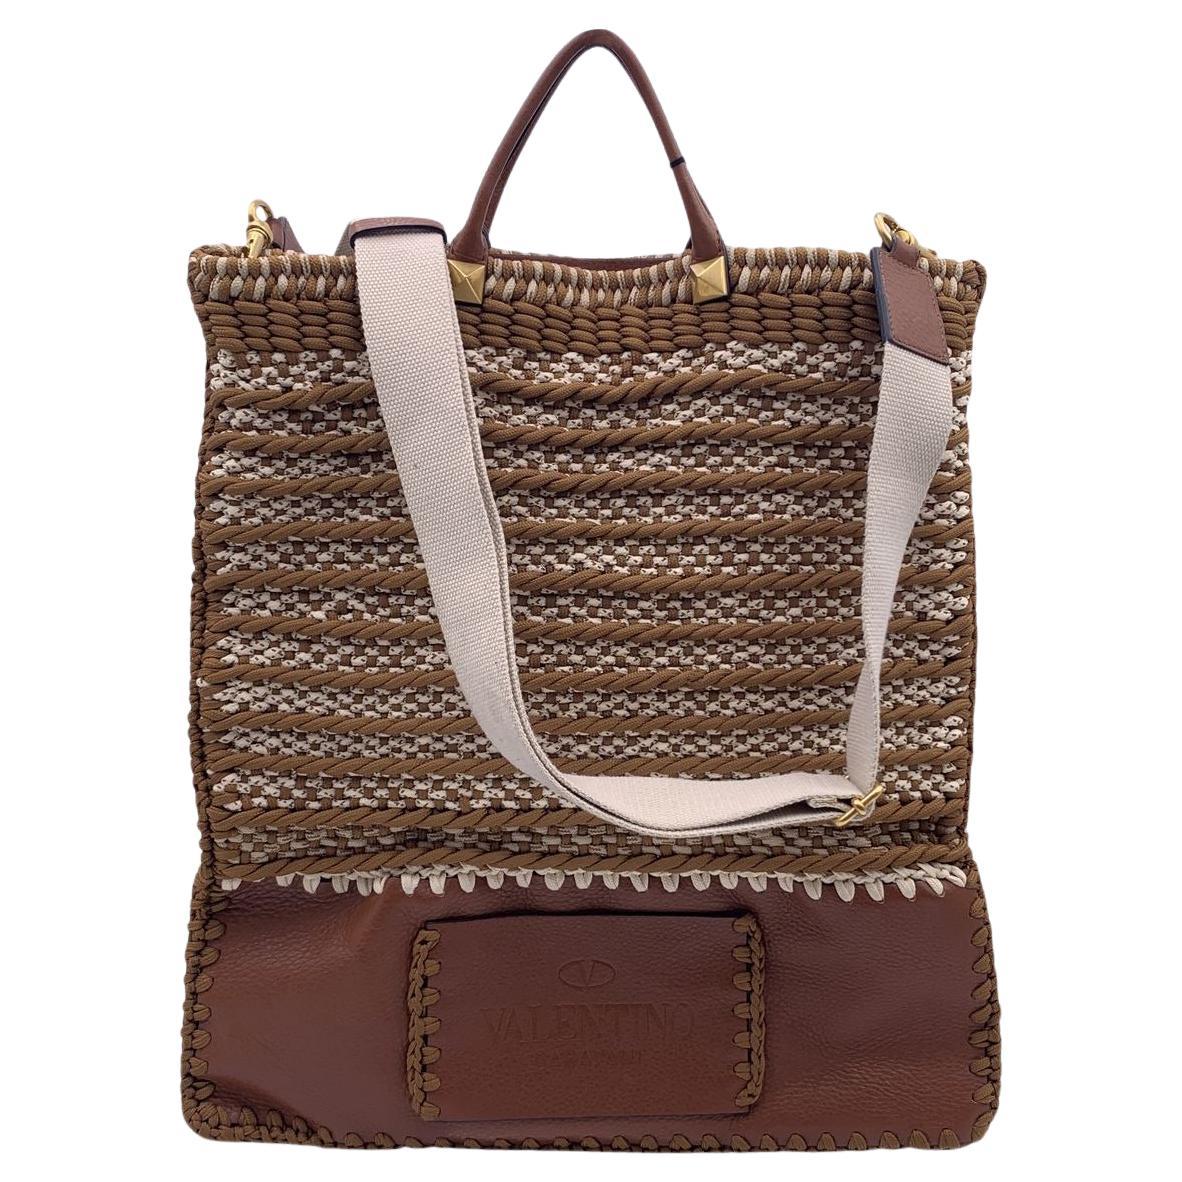 Valentino Garavani Rockstud Brown Leather and Crochet Tote Bag en vente